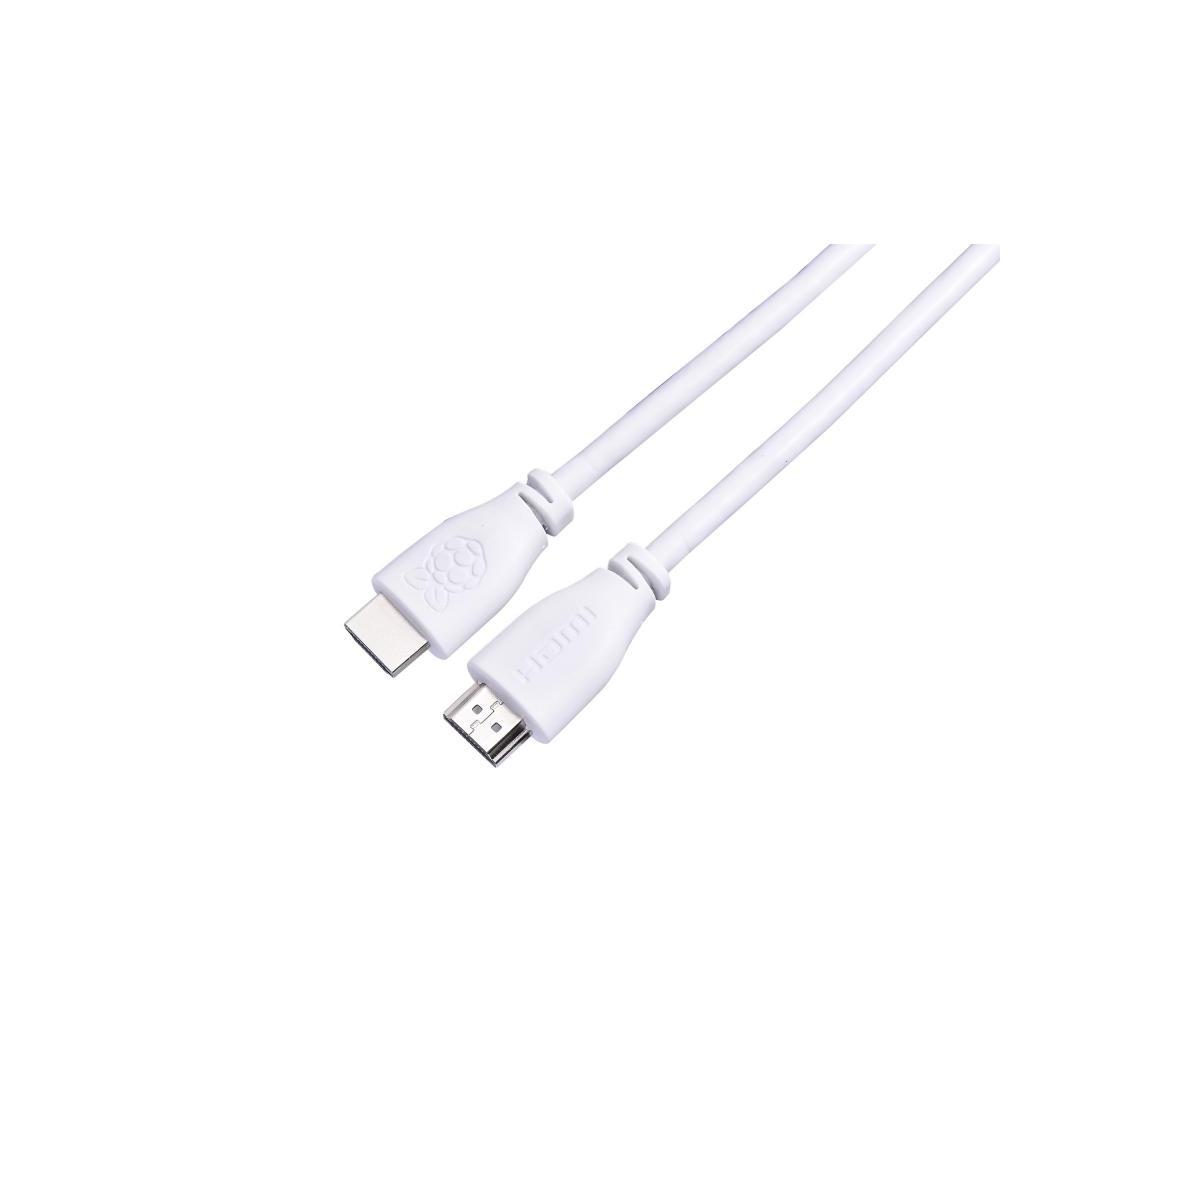 RASPBERRY PI HDMI Kabel, 111-1029 Weiß